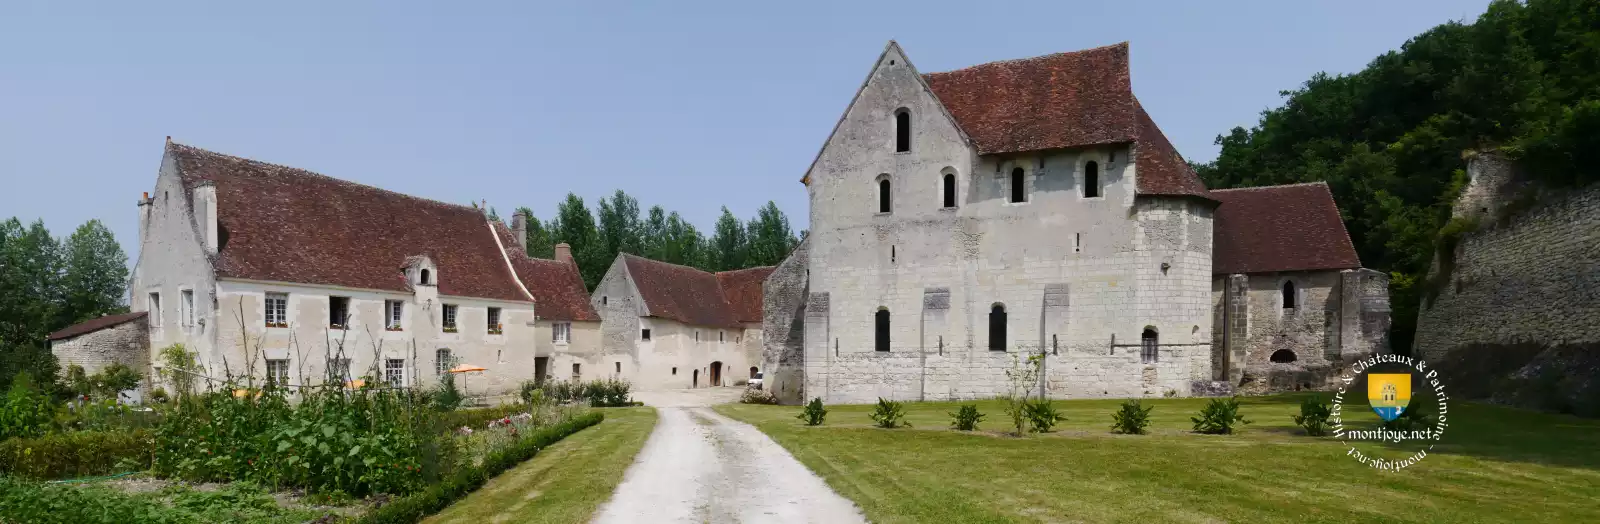 corroirie monastere chateau montresor